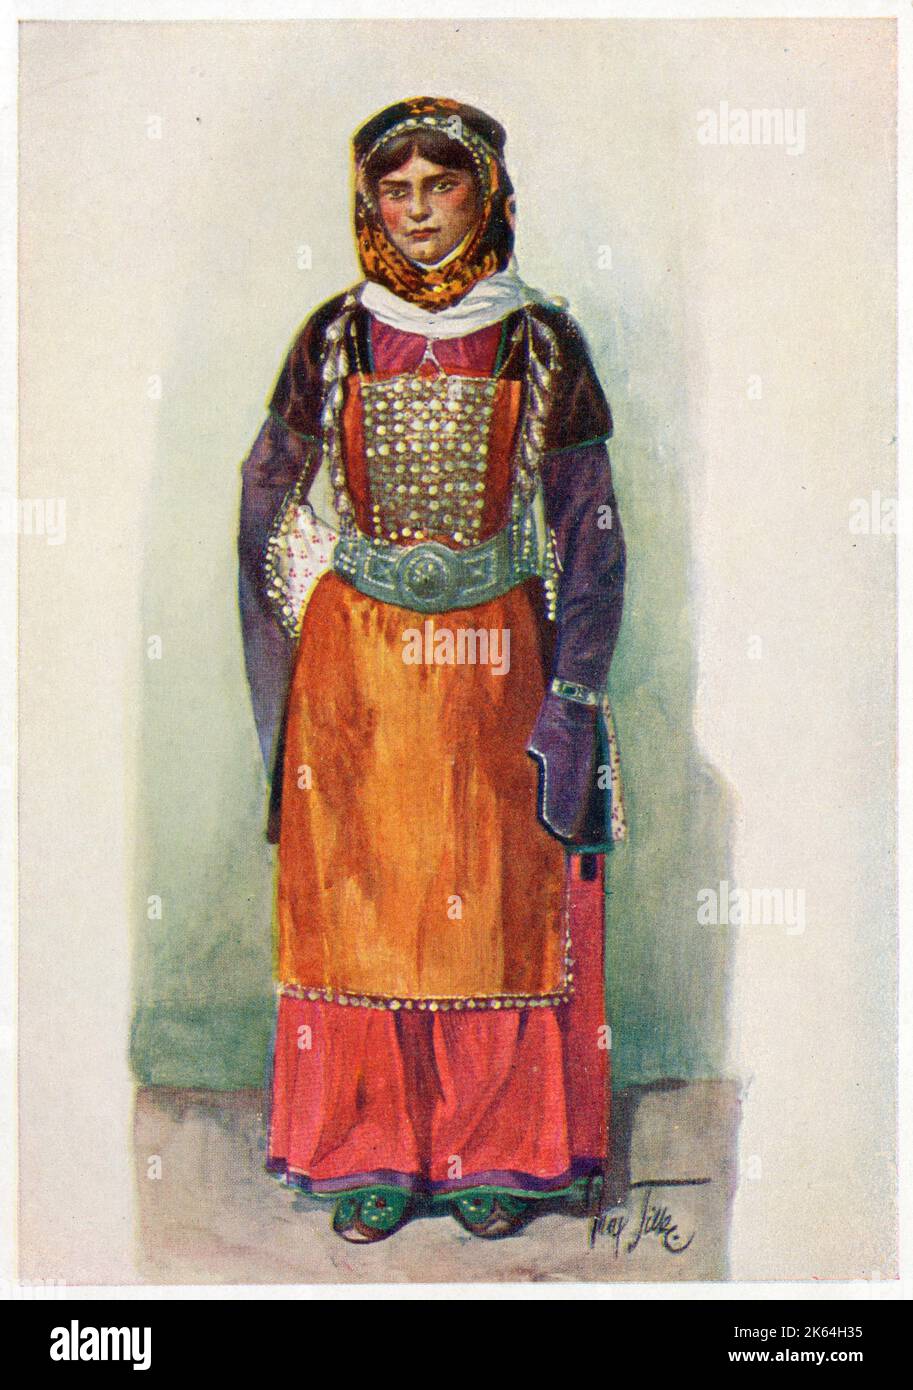 People of the Caucasus series by Max Karl Tilke - Ingiloy Woman, Georgia. Stock Photo